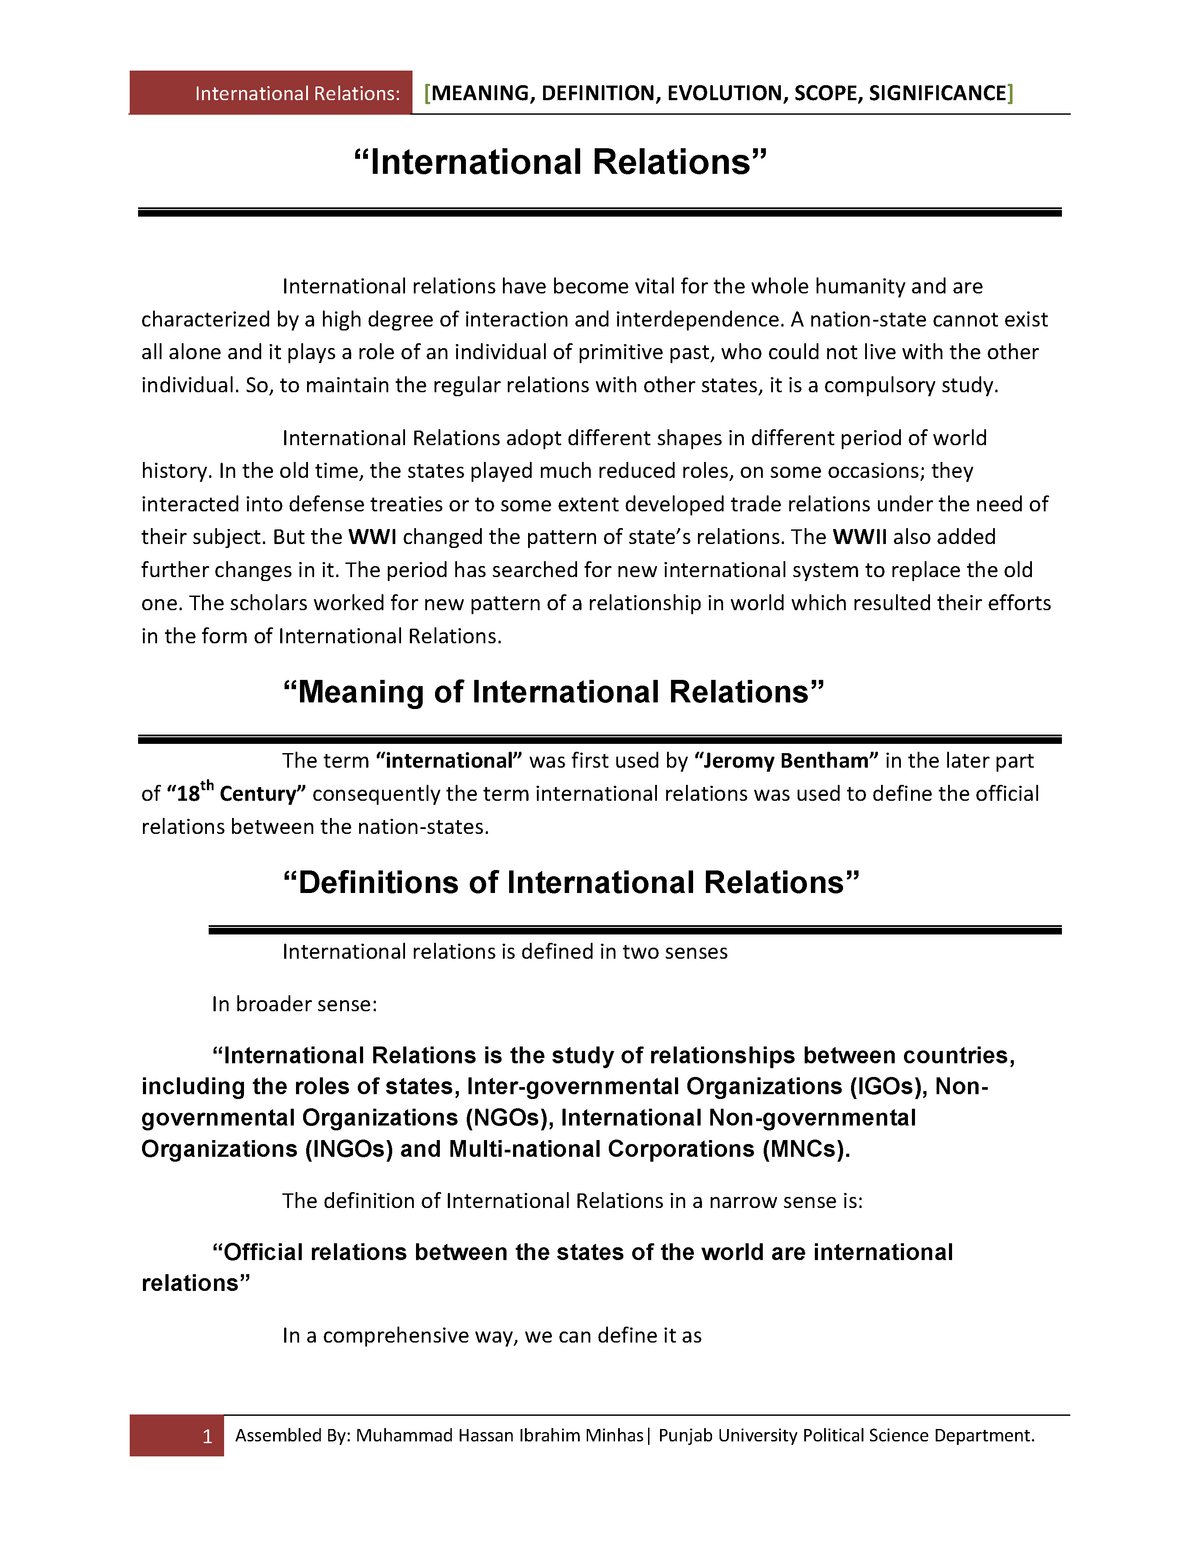 Q.8 define international relations. discuss it’s changing/ evolving scope. 2020